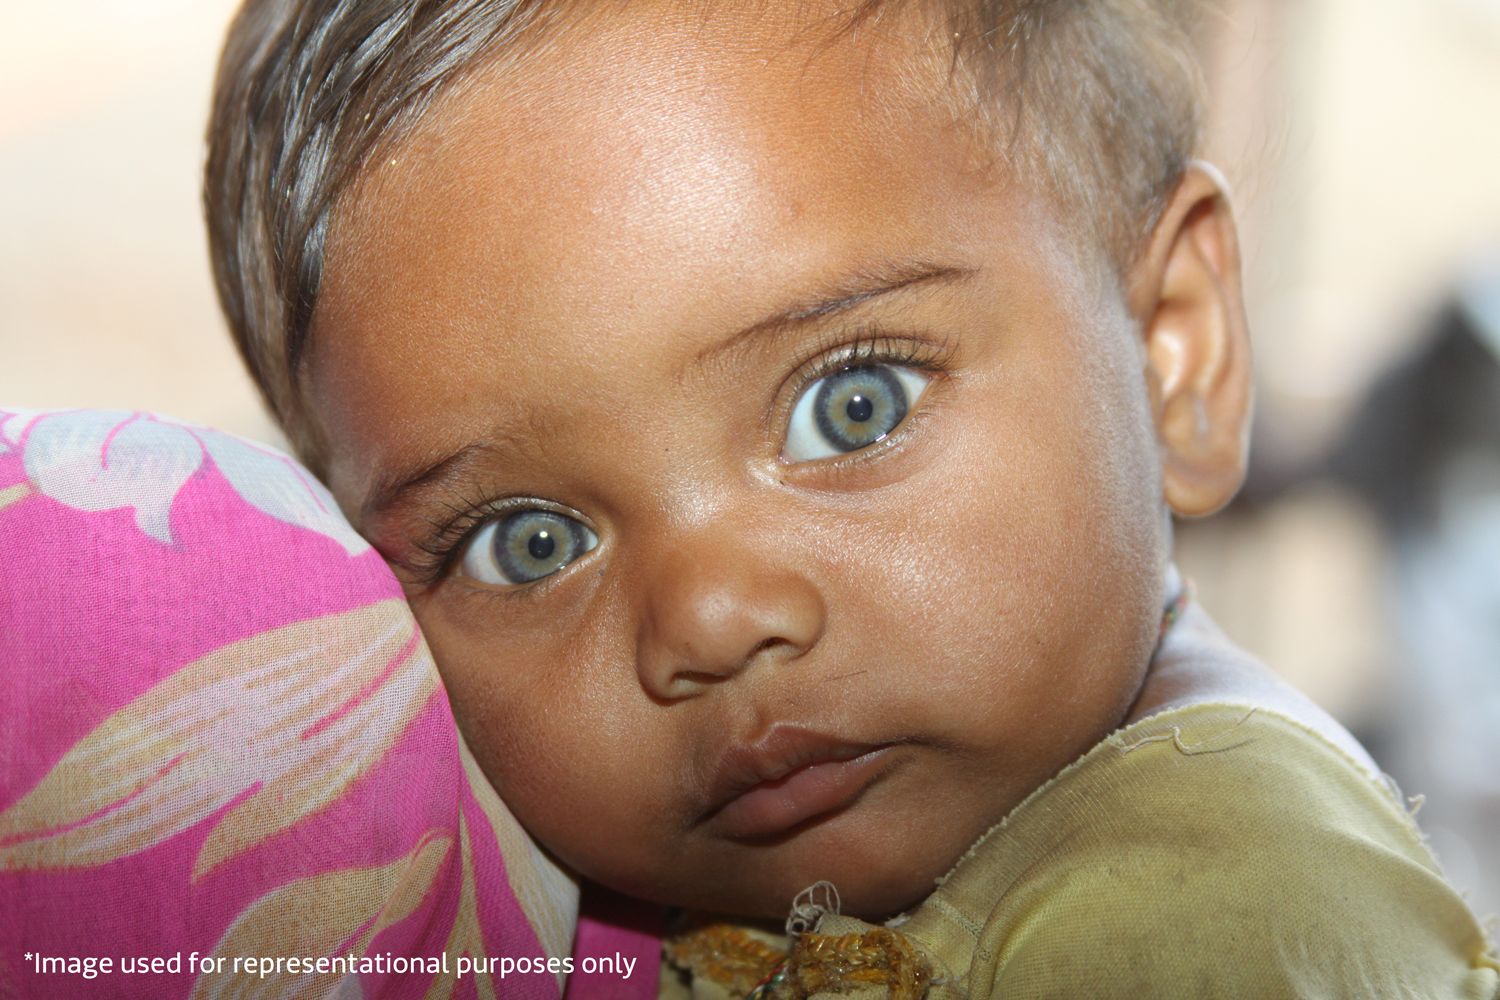 malnourished children in India